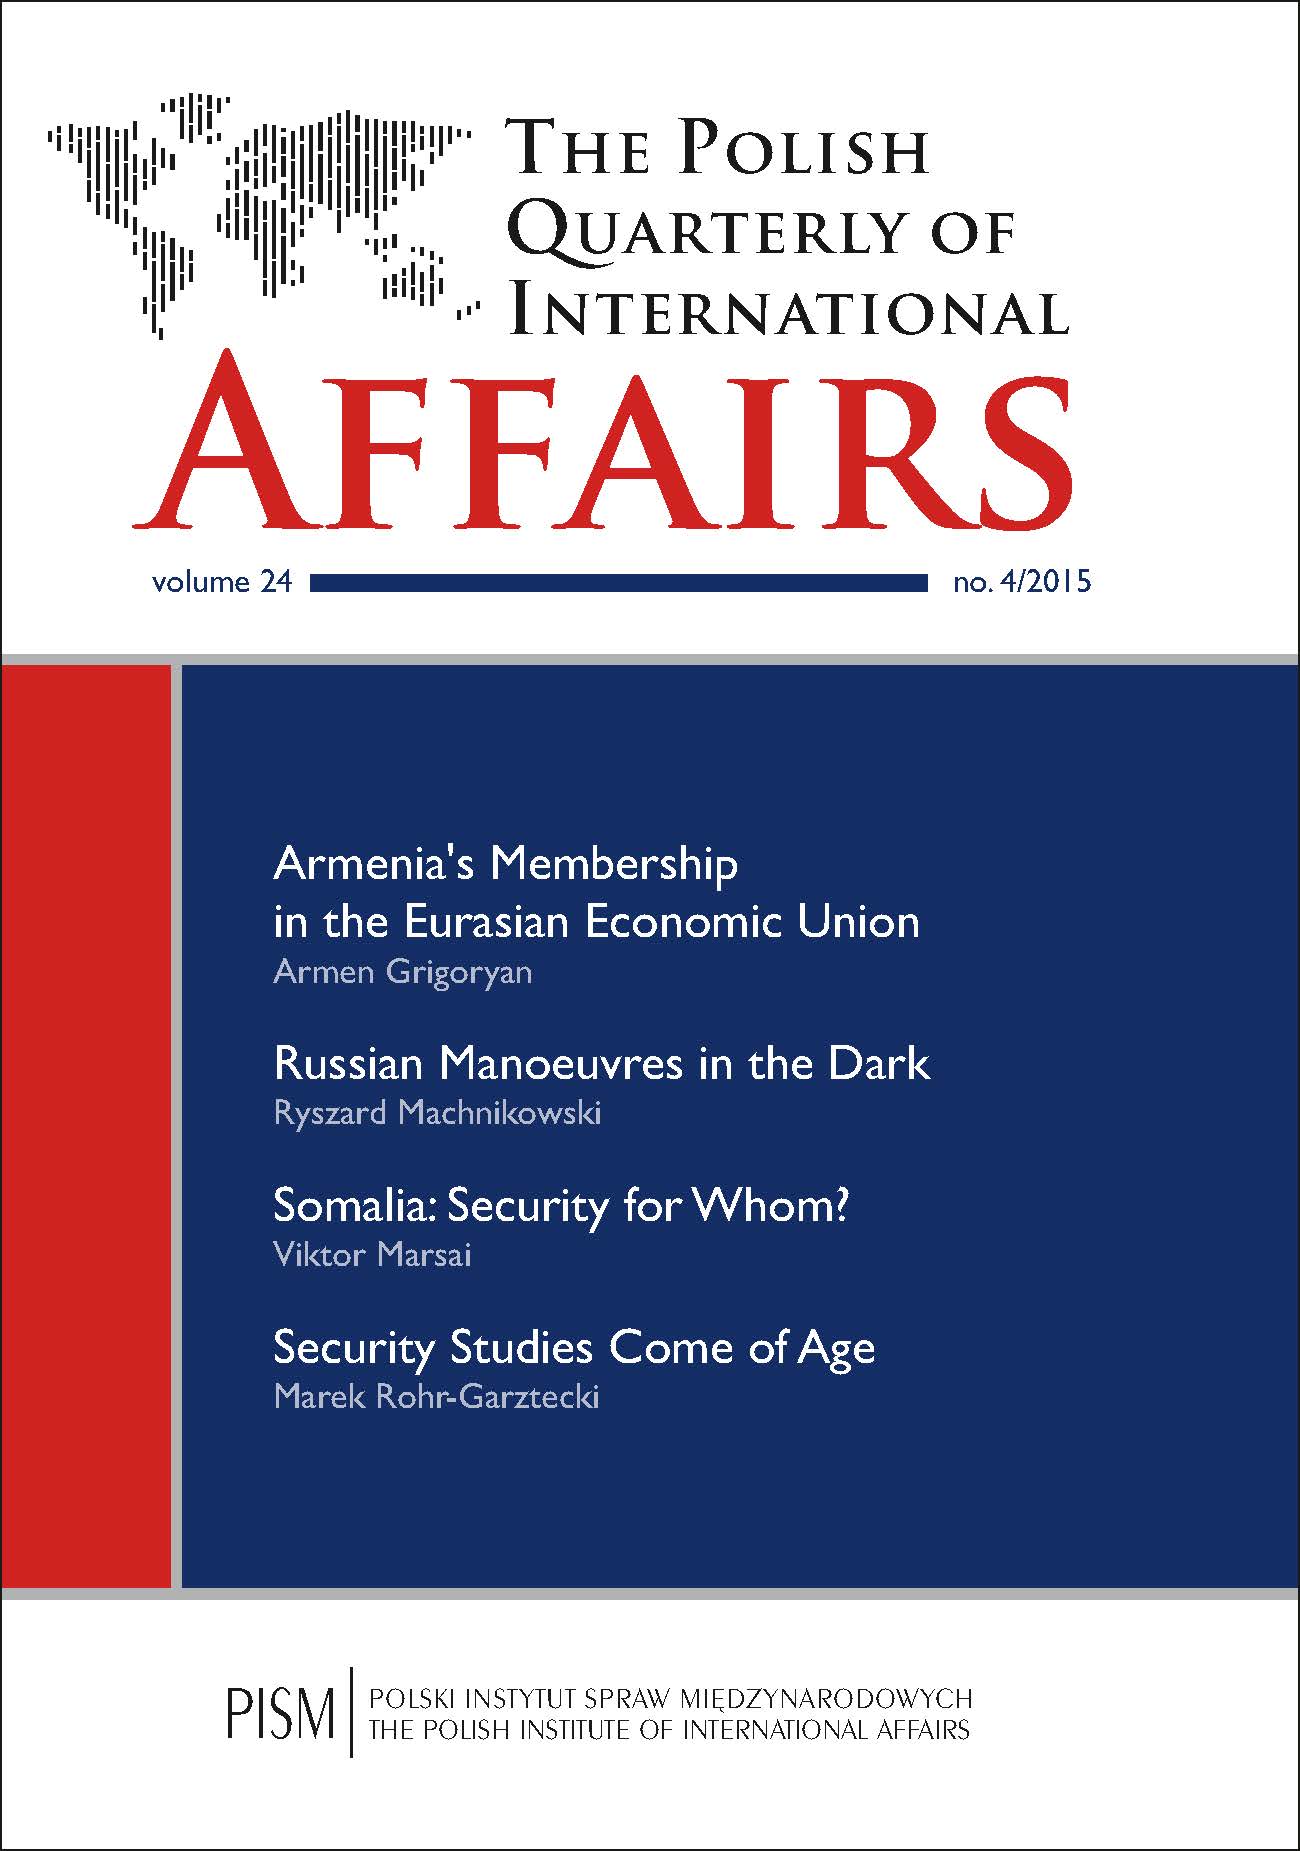 Post-Soviet Central Asia as a Unique Regional Security Complex